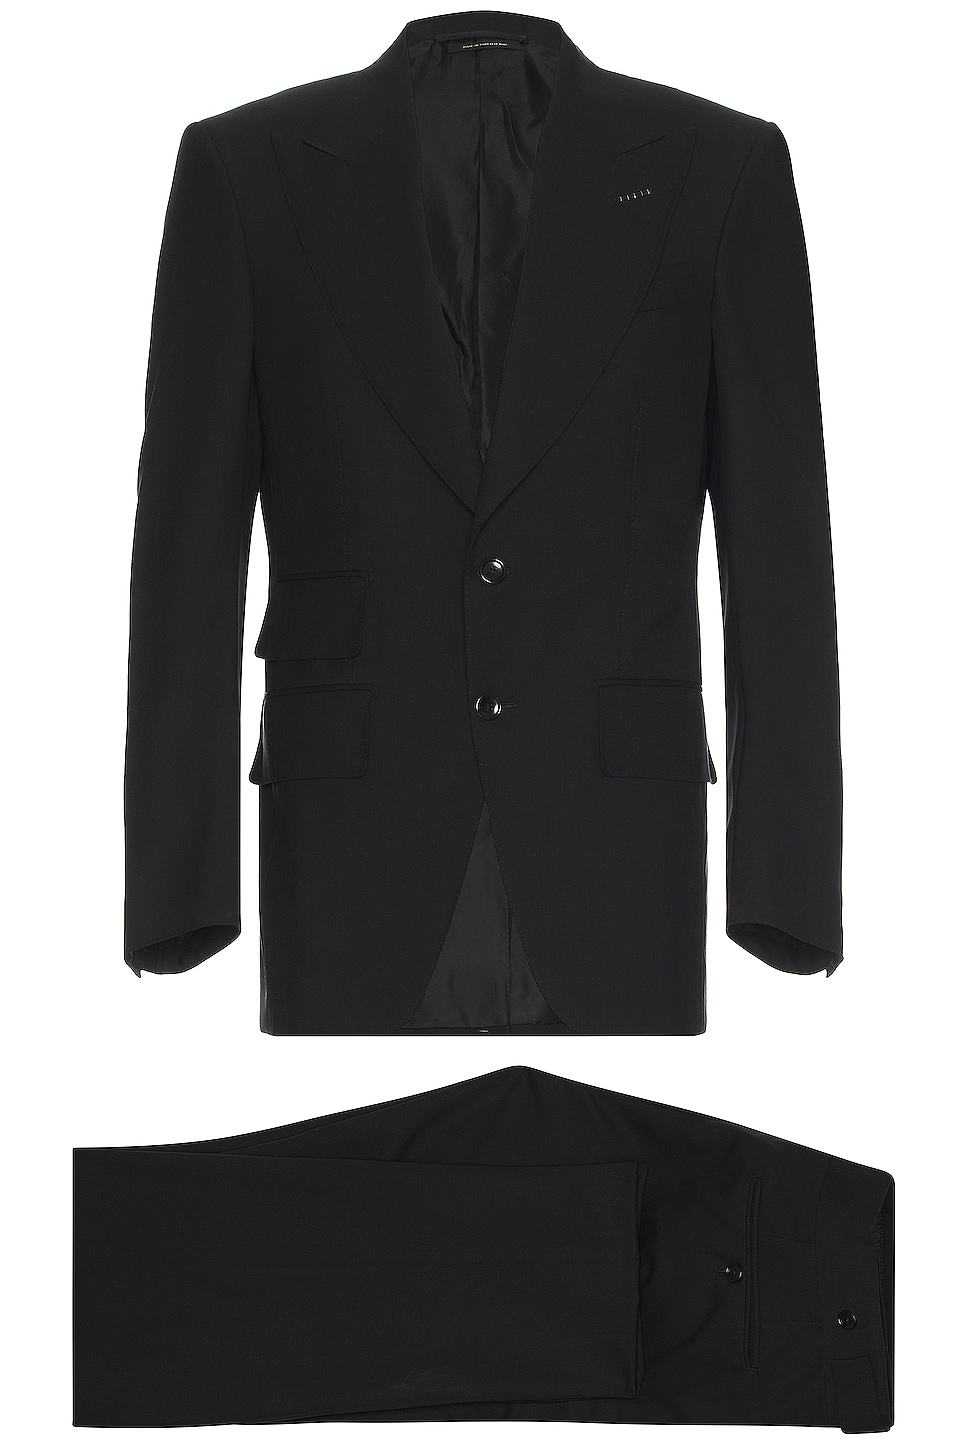 Image 1 of TOM FORD Atticus Plain Weave Suit in Black